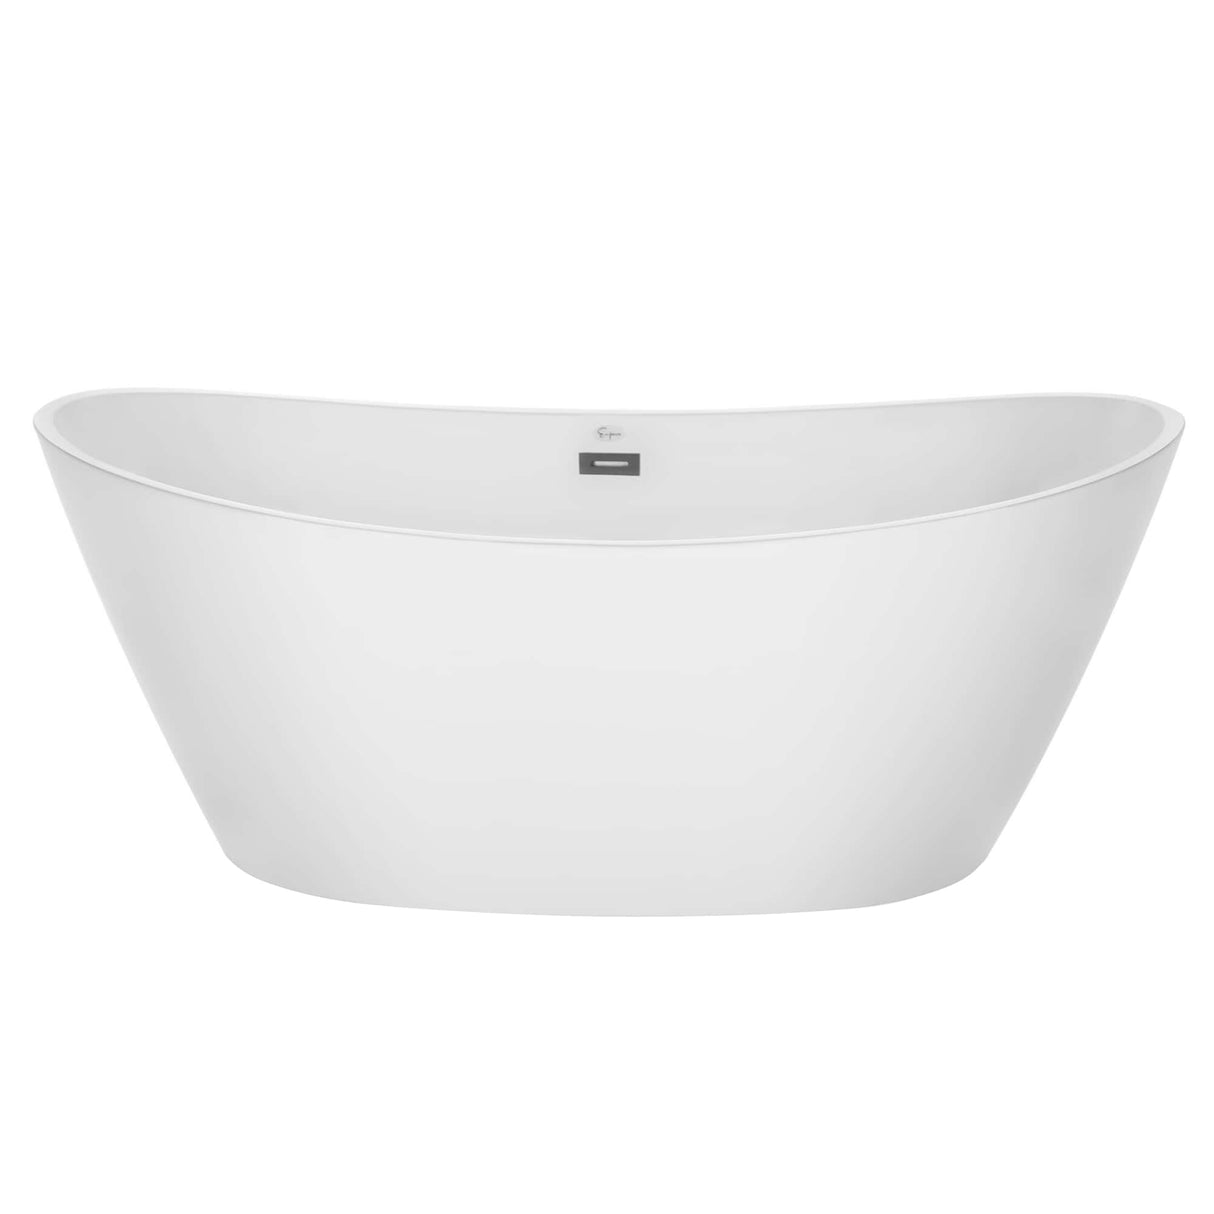 Empava-67FT1518LED freestanding acrylic soaking oval modern white SPA bathtub with LED Lights over flow